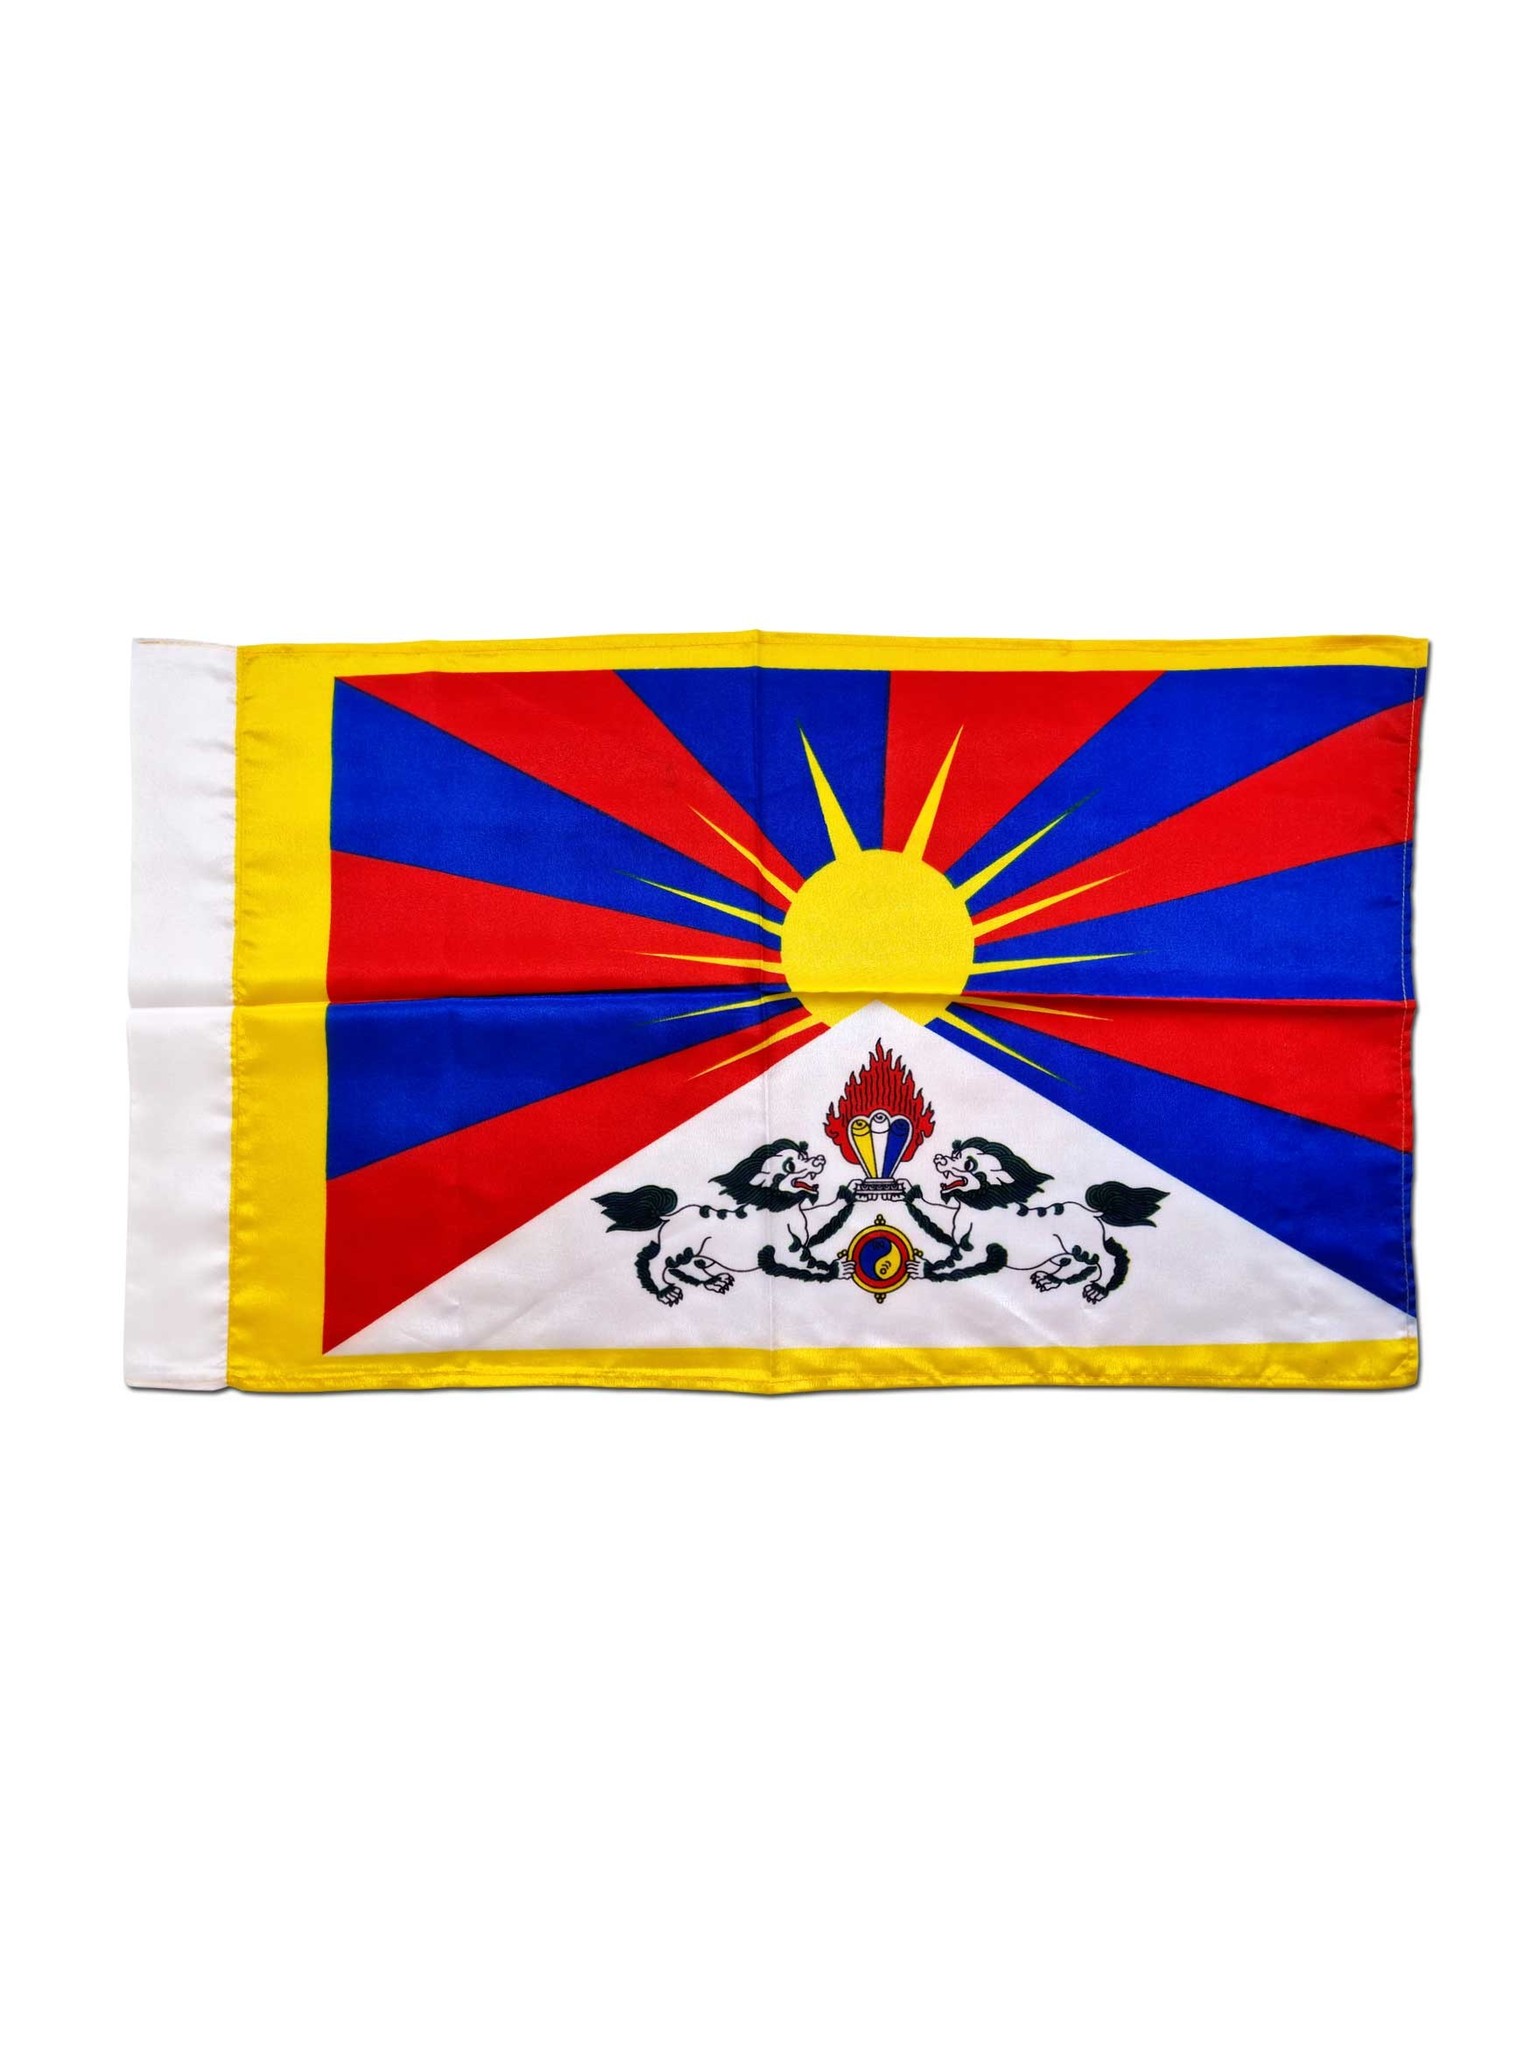 Patch thermocollant « Drapeau tibétain », lot de 2 – Atelier Tibet